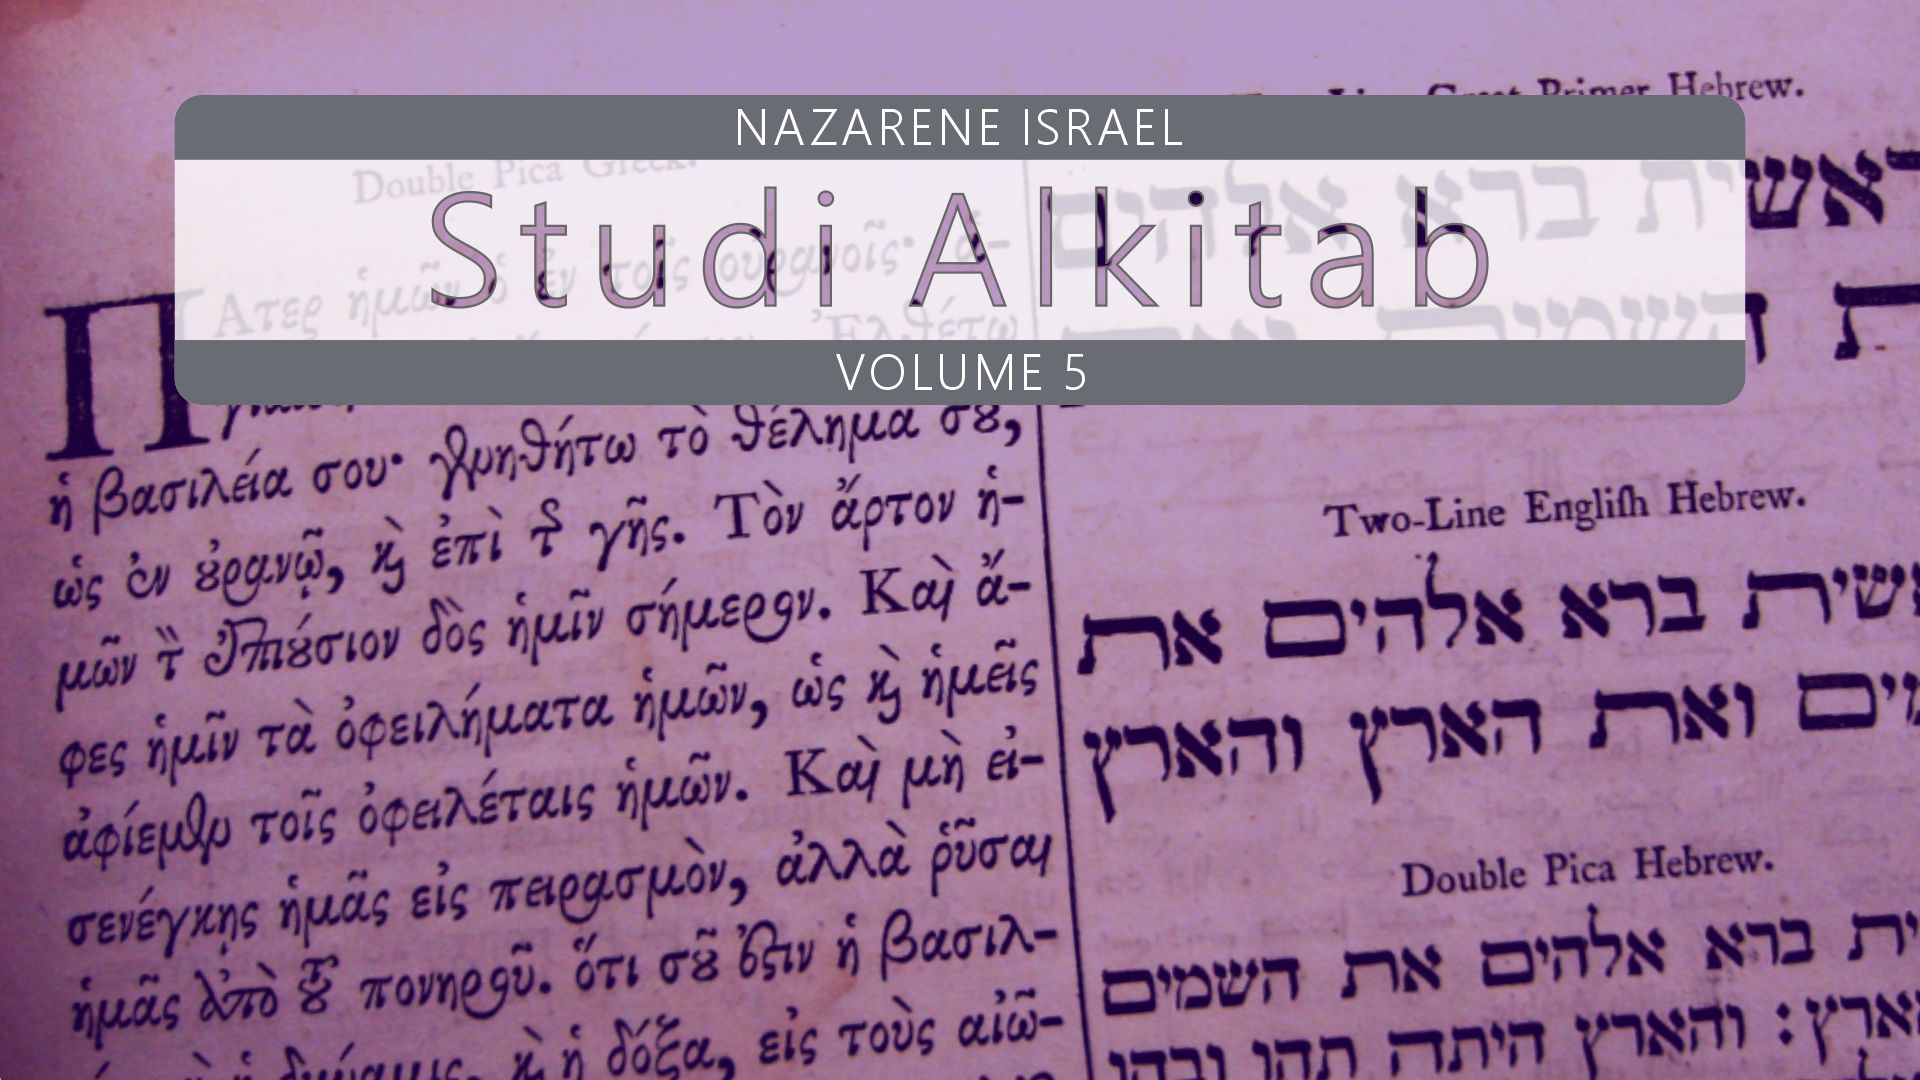 Studi Alkitab Nazaret Vol. 5